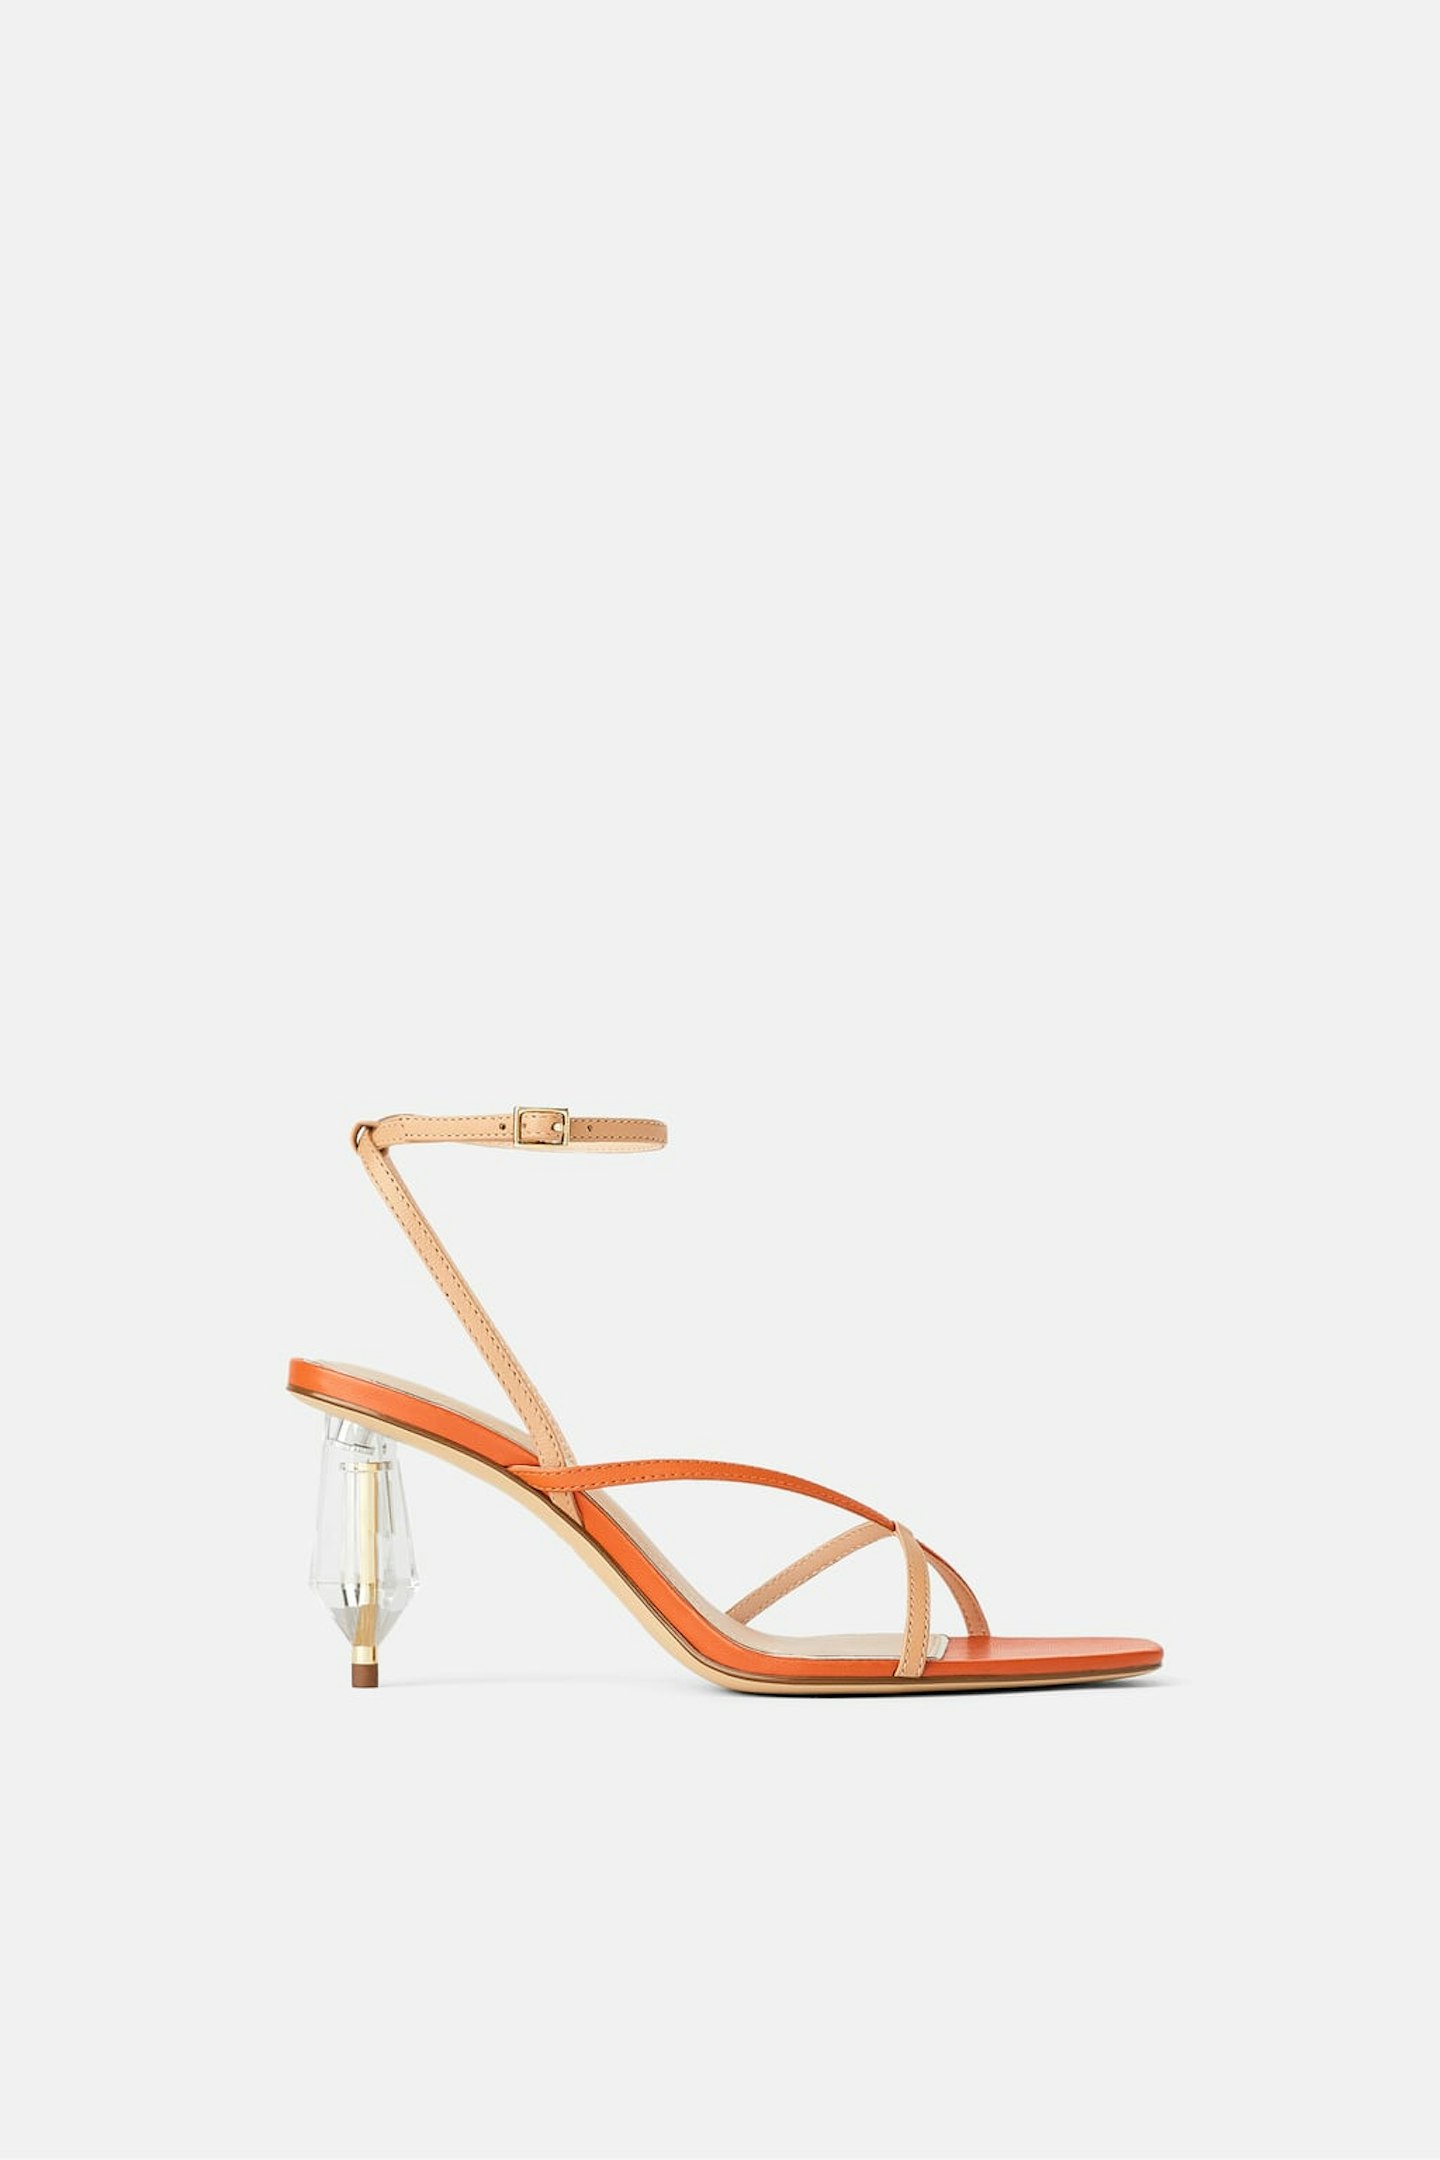 Zara, Leather Sandals With Geometric Heel, £69.99